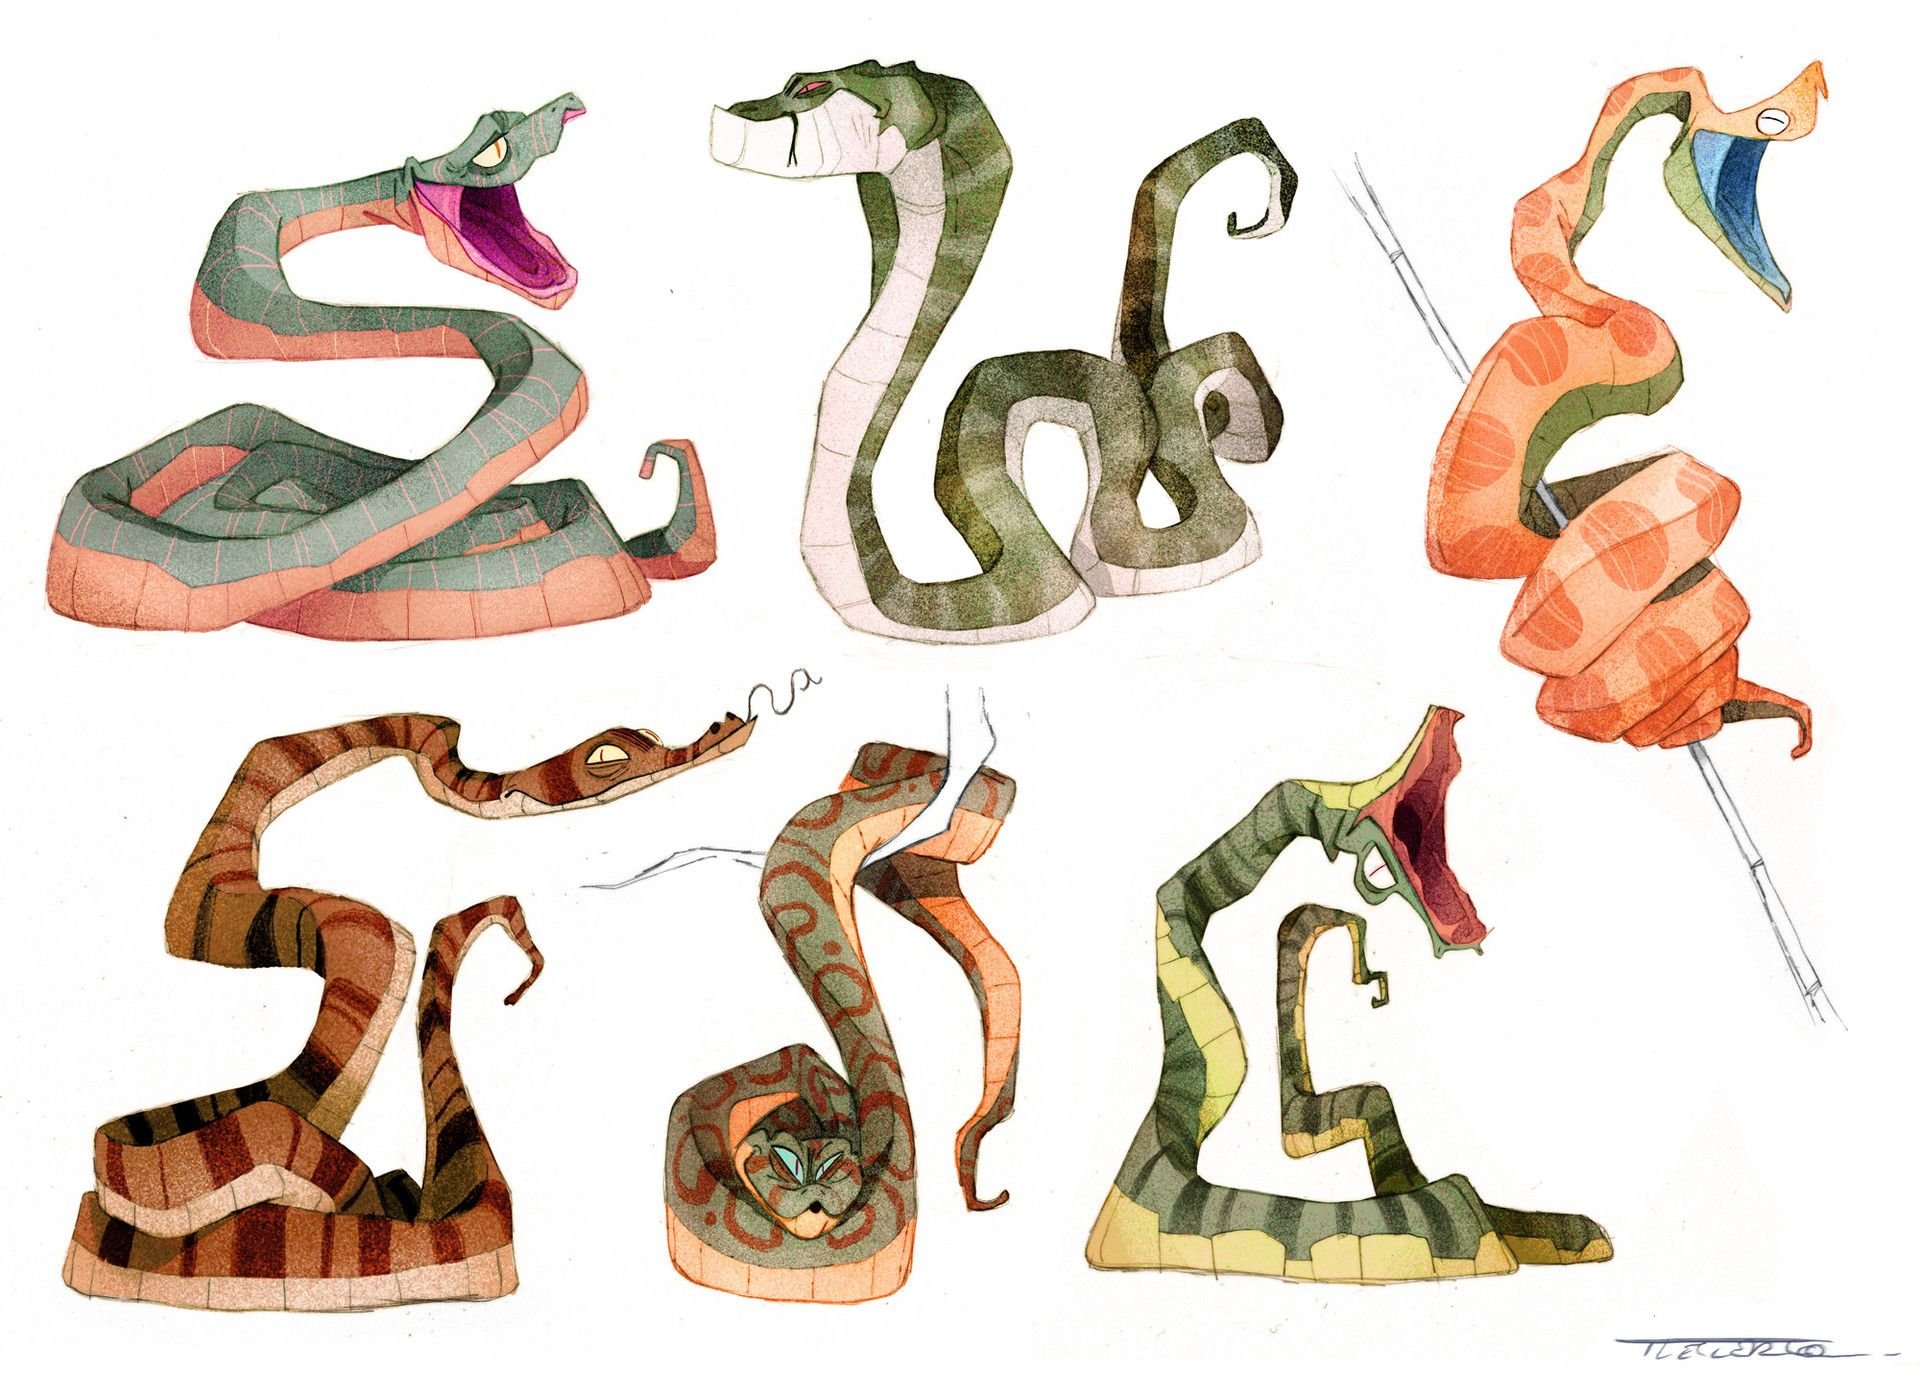 Змея на других языках